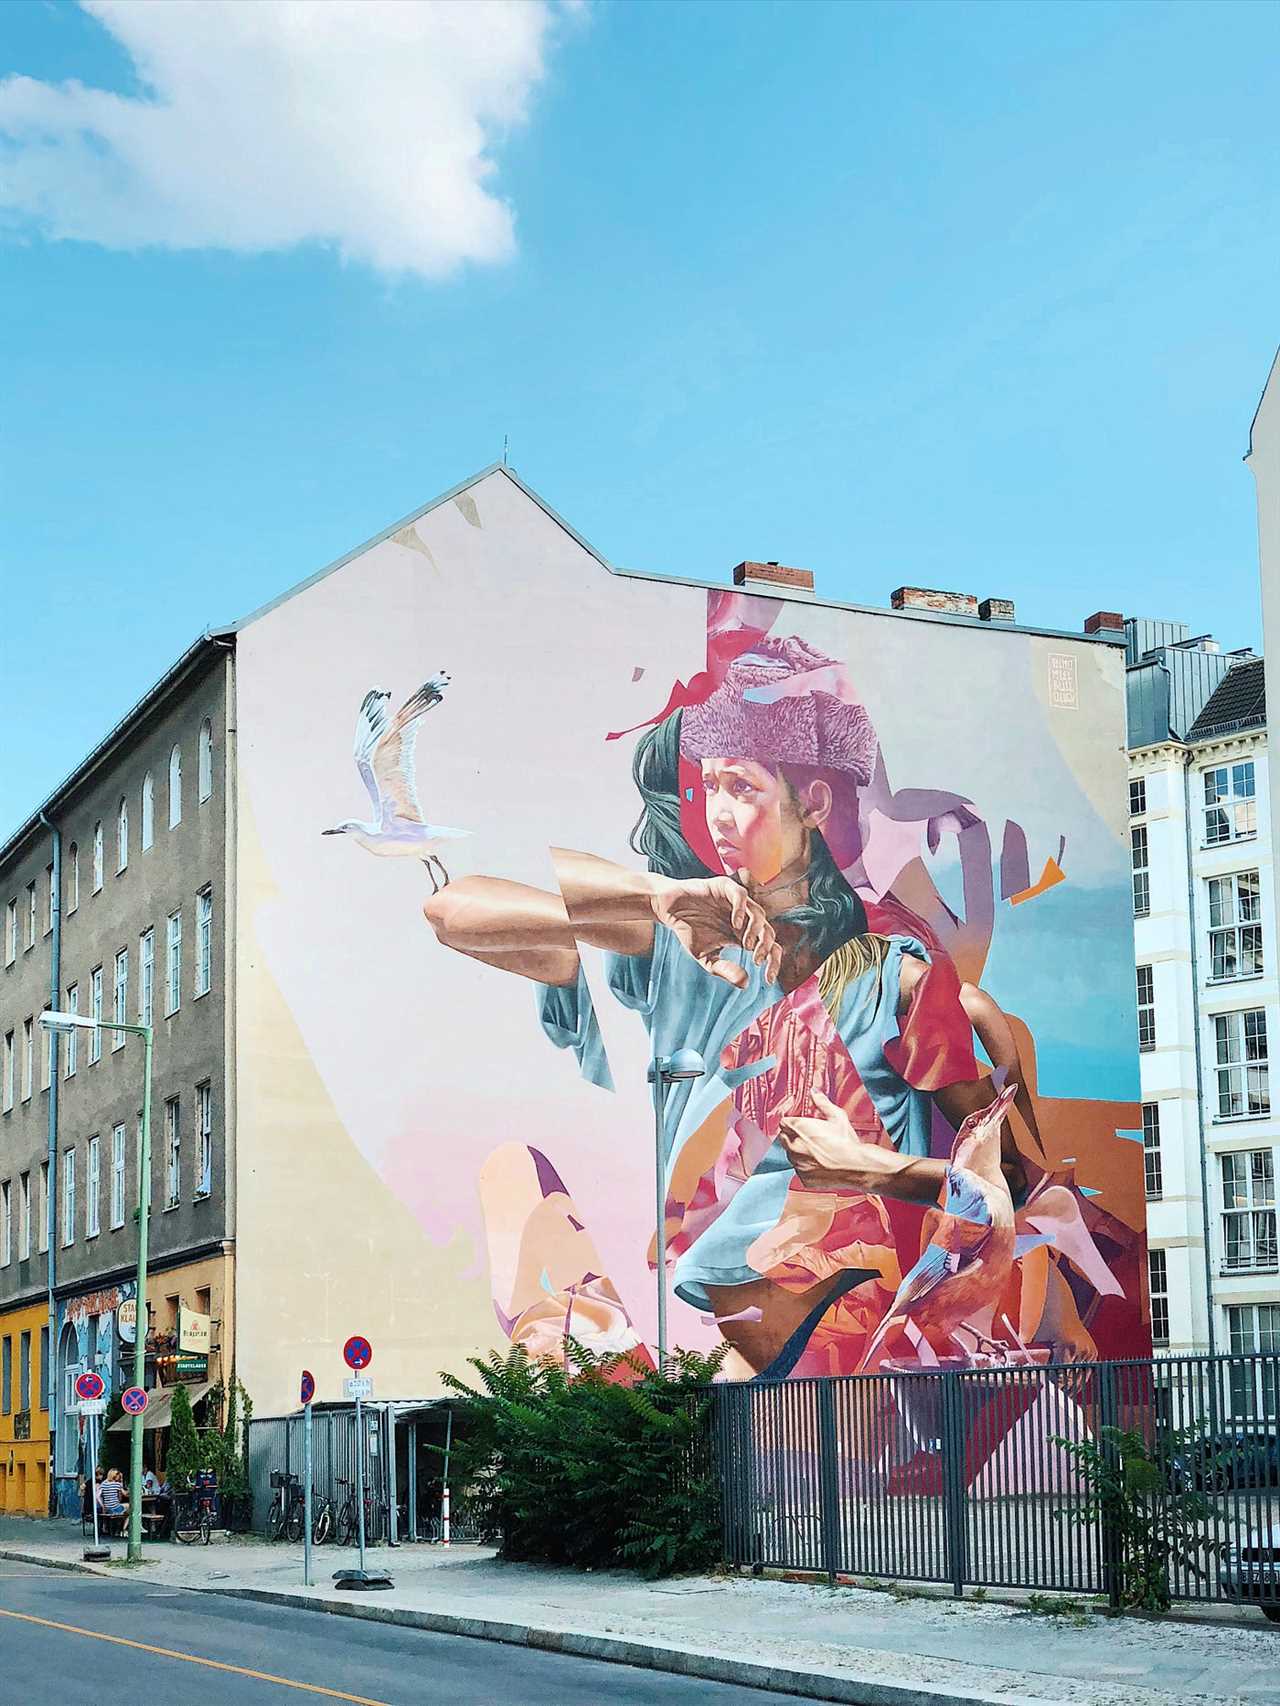 Bringing Communities Together: Murals as a Form of Public Art